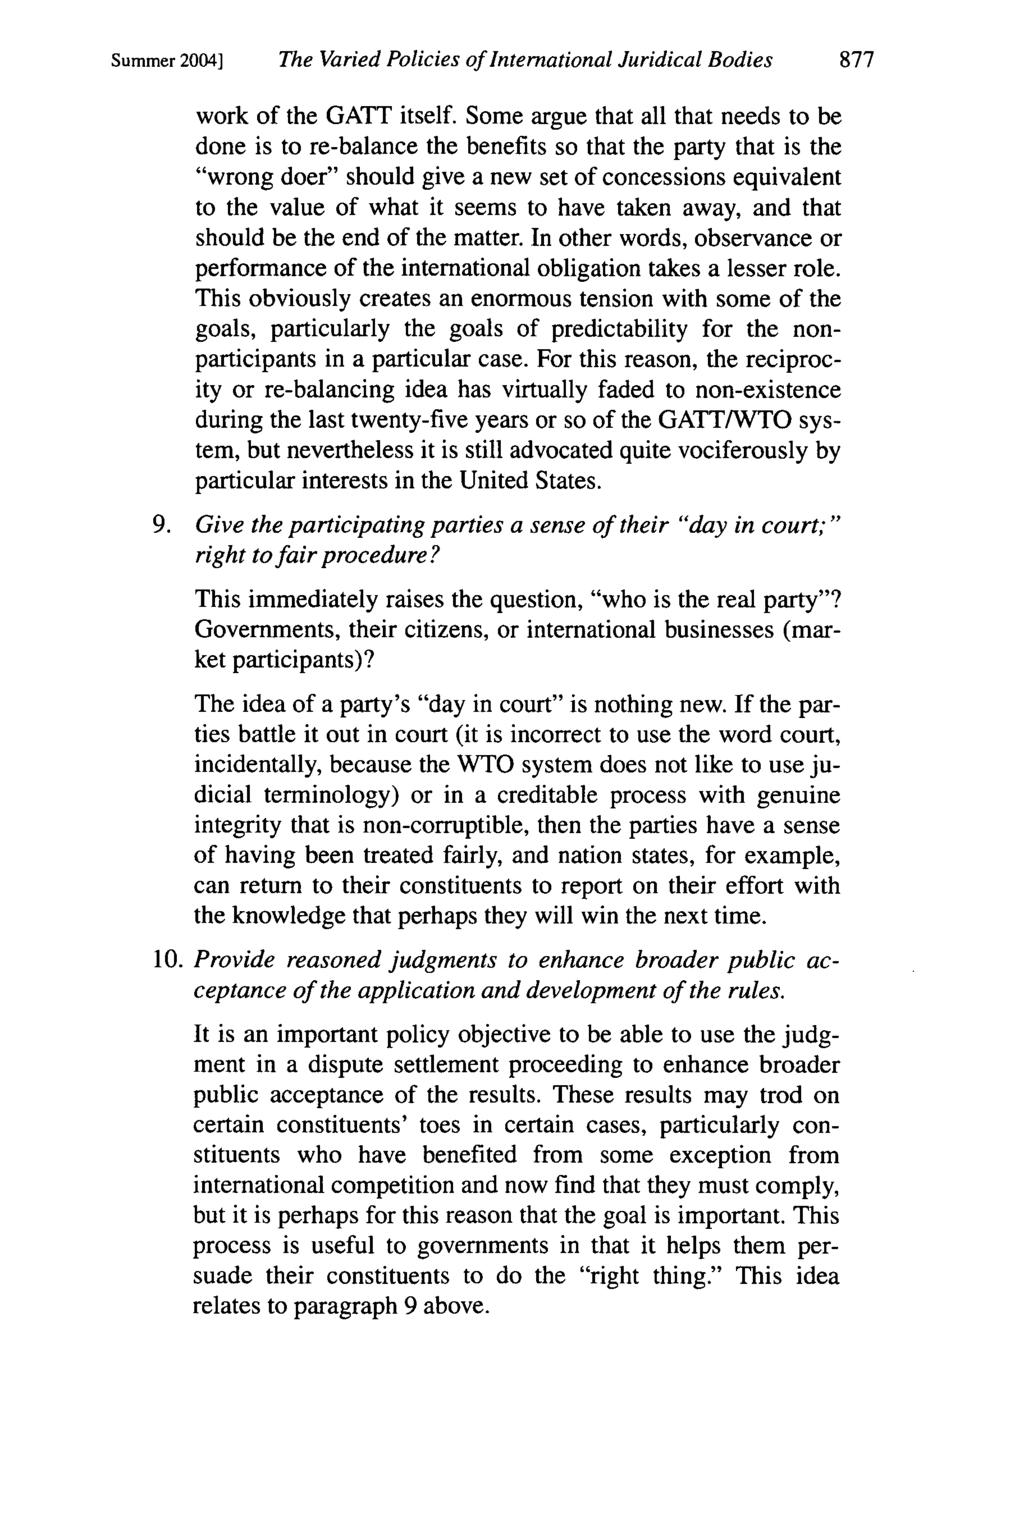 Summer 2004] The Varied Policies of International Juridical Bodies 8 work of the GATT itself.